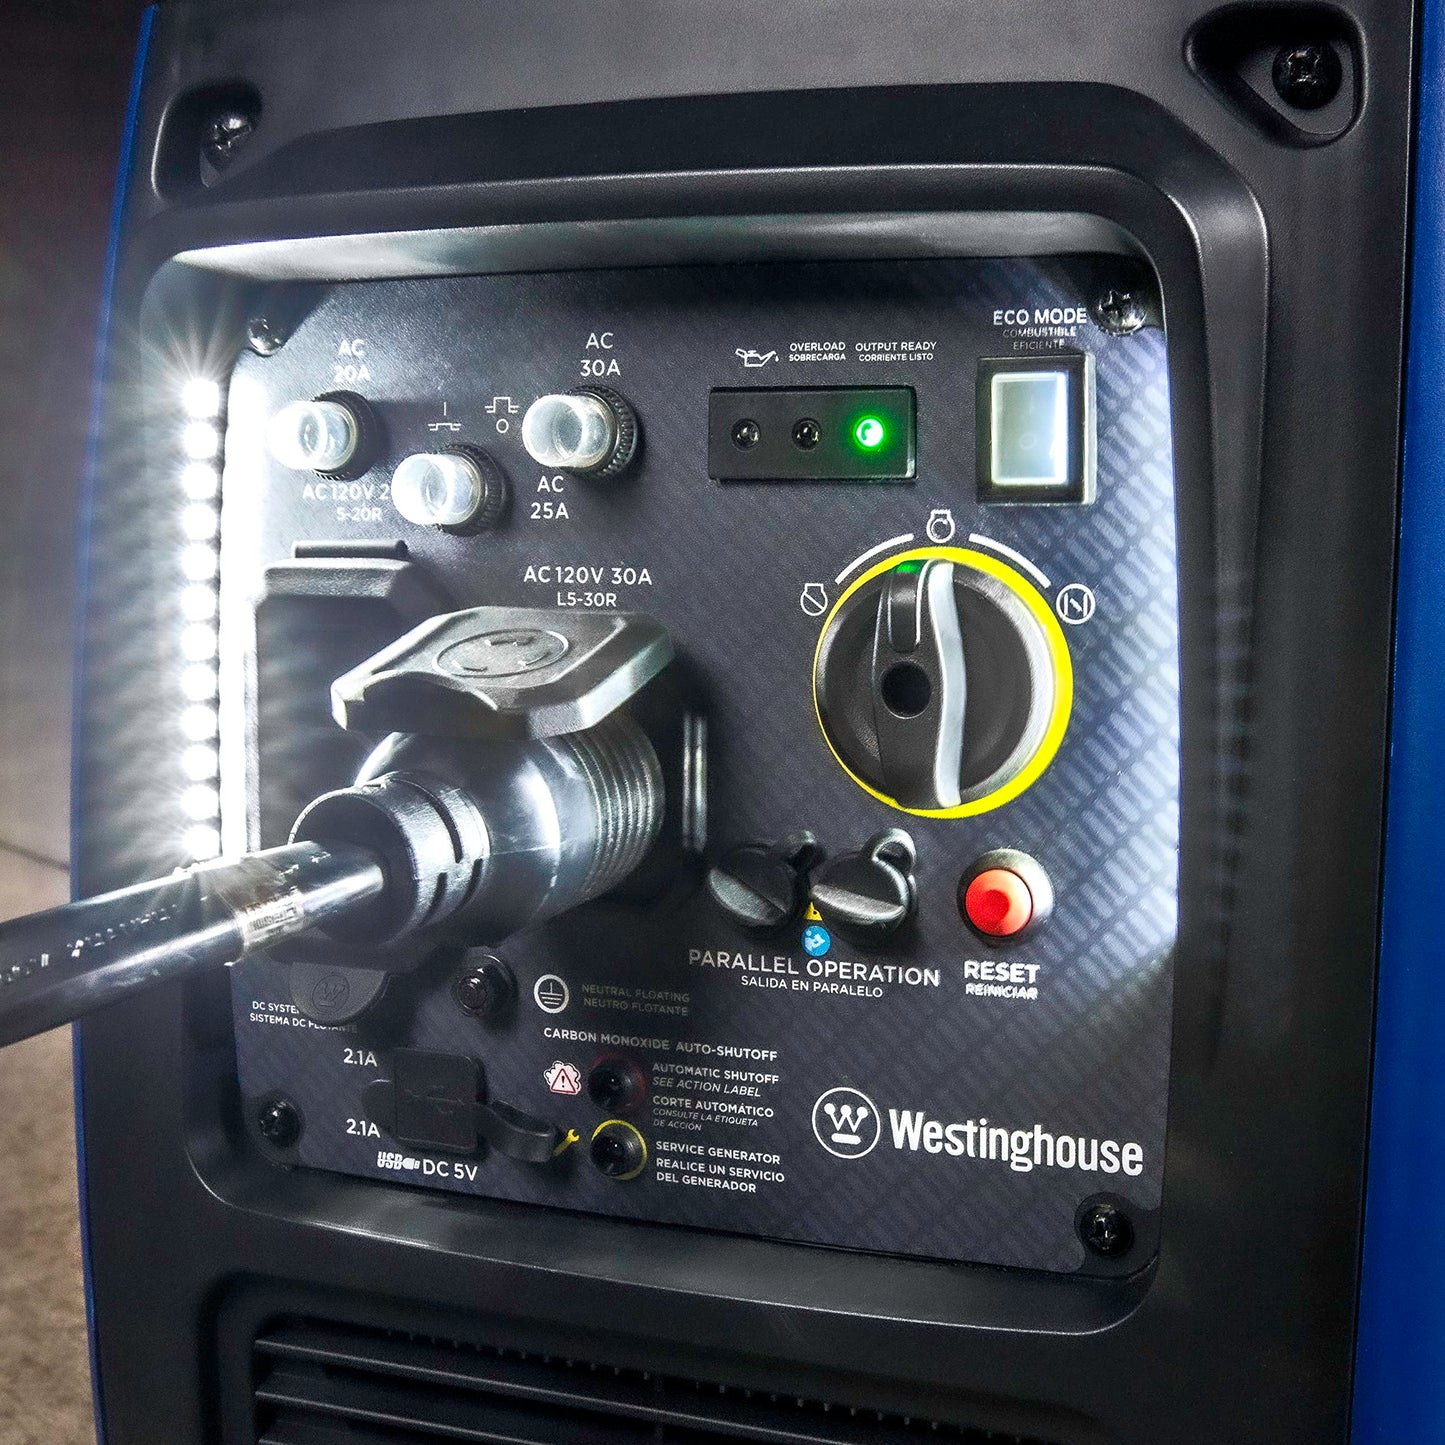 Westinghouse Outdoor Power Equipment WH3700iXLTc 3700 Peak Watt Super Quiet Portable Inverter Generator